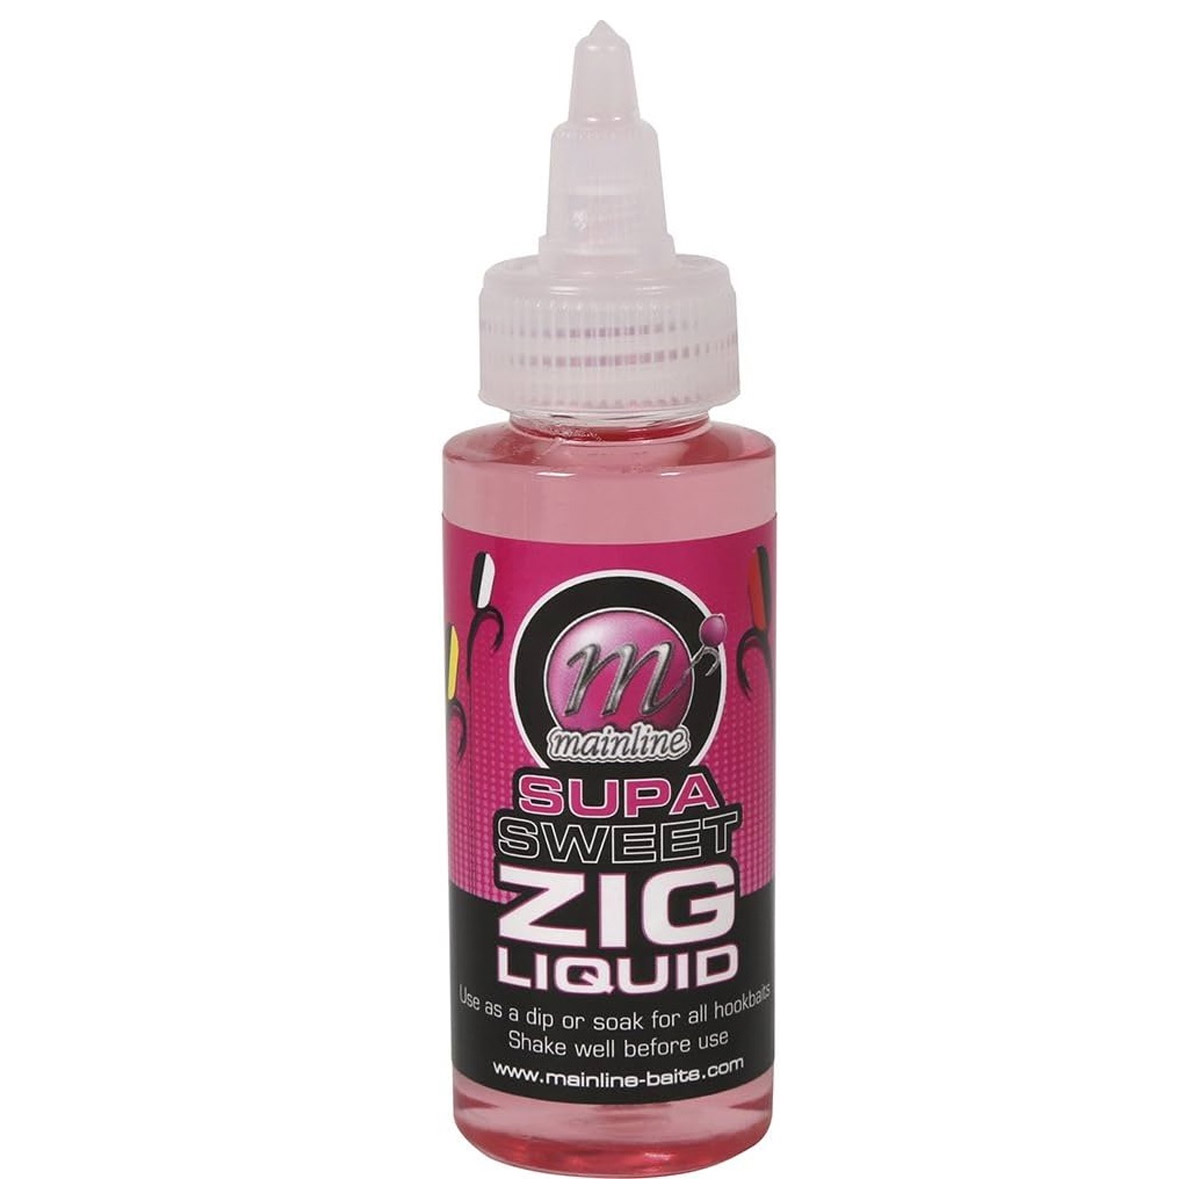 Mainline Supa Sweet Zig Liquid